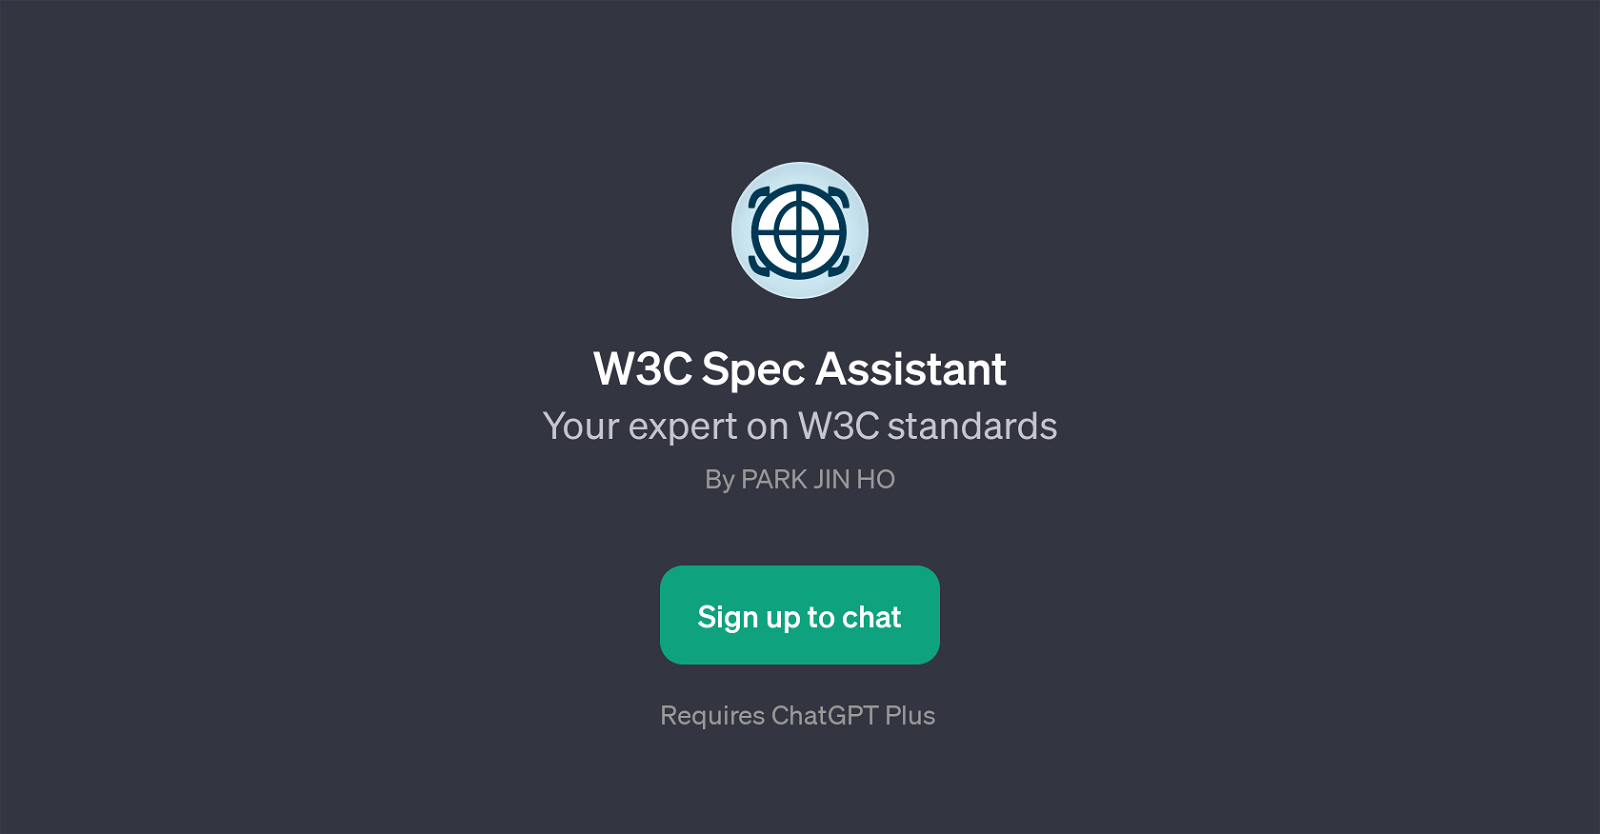 W3C Spec Assistant website